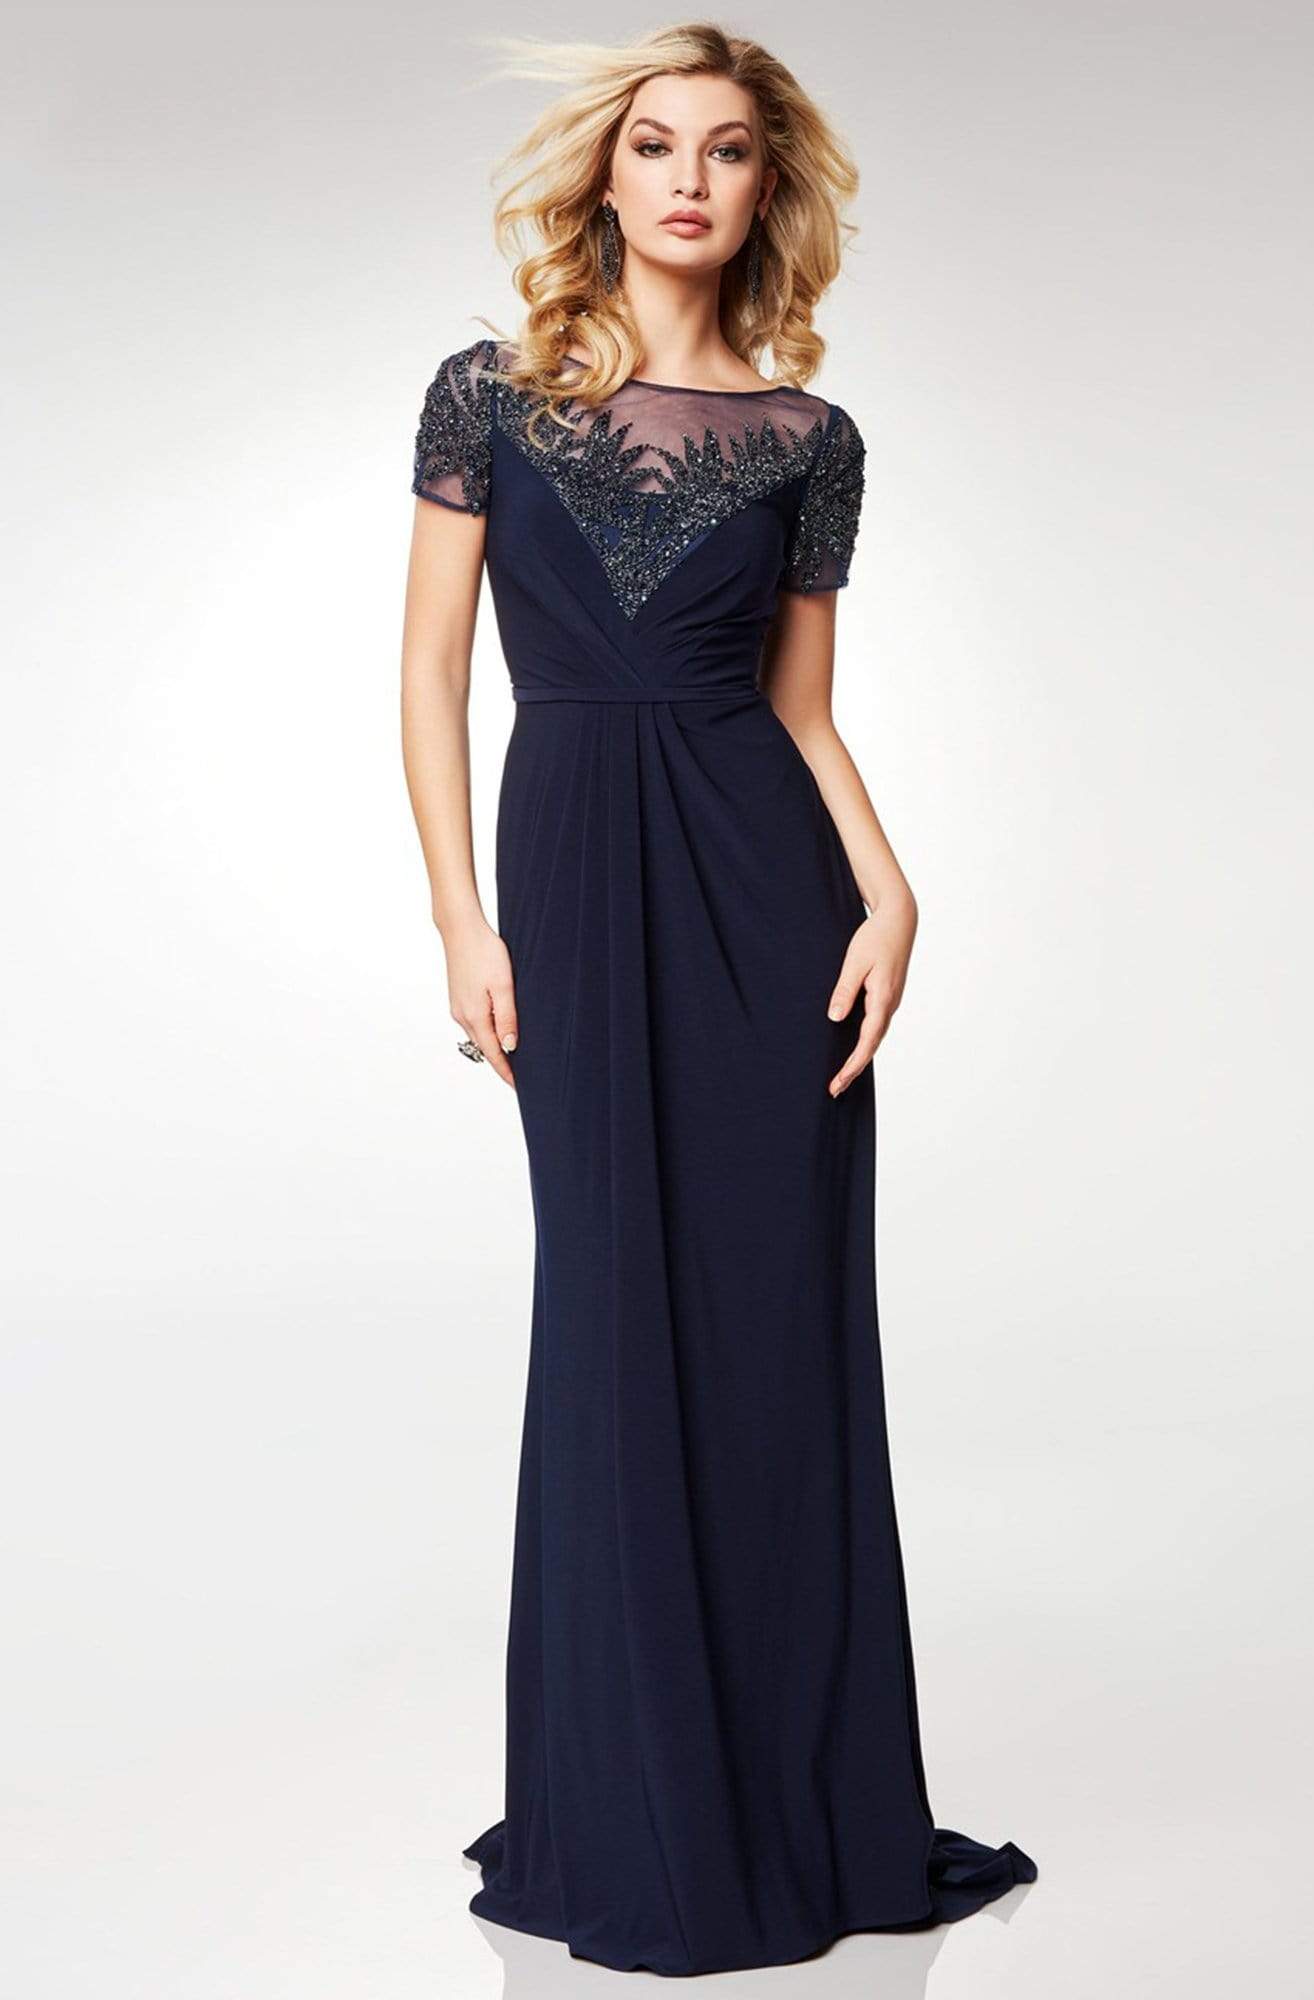 Clarisse - M6532 Illusion Neckline Gleaming Embellished Gown